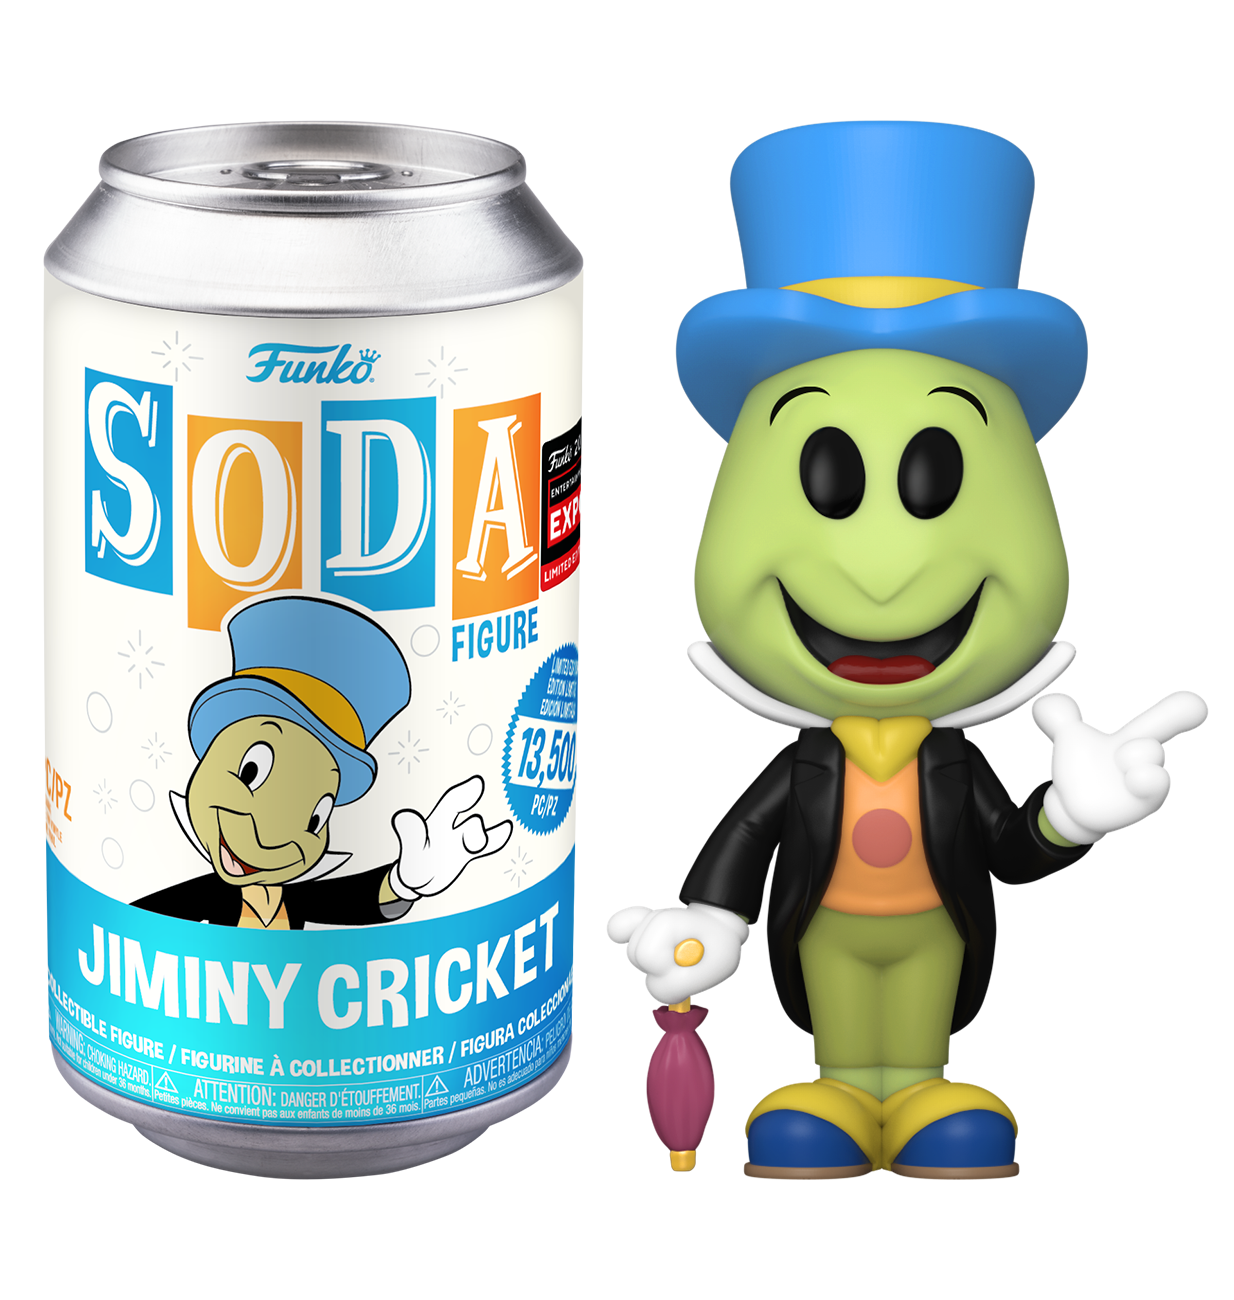 Pinocchio - Jiminy Cricket C2E2 2024 Chicago Comic Con Exclusive Vinyl Soda Figure